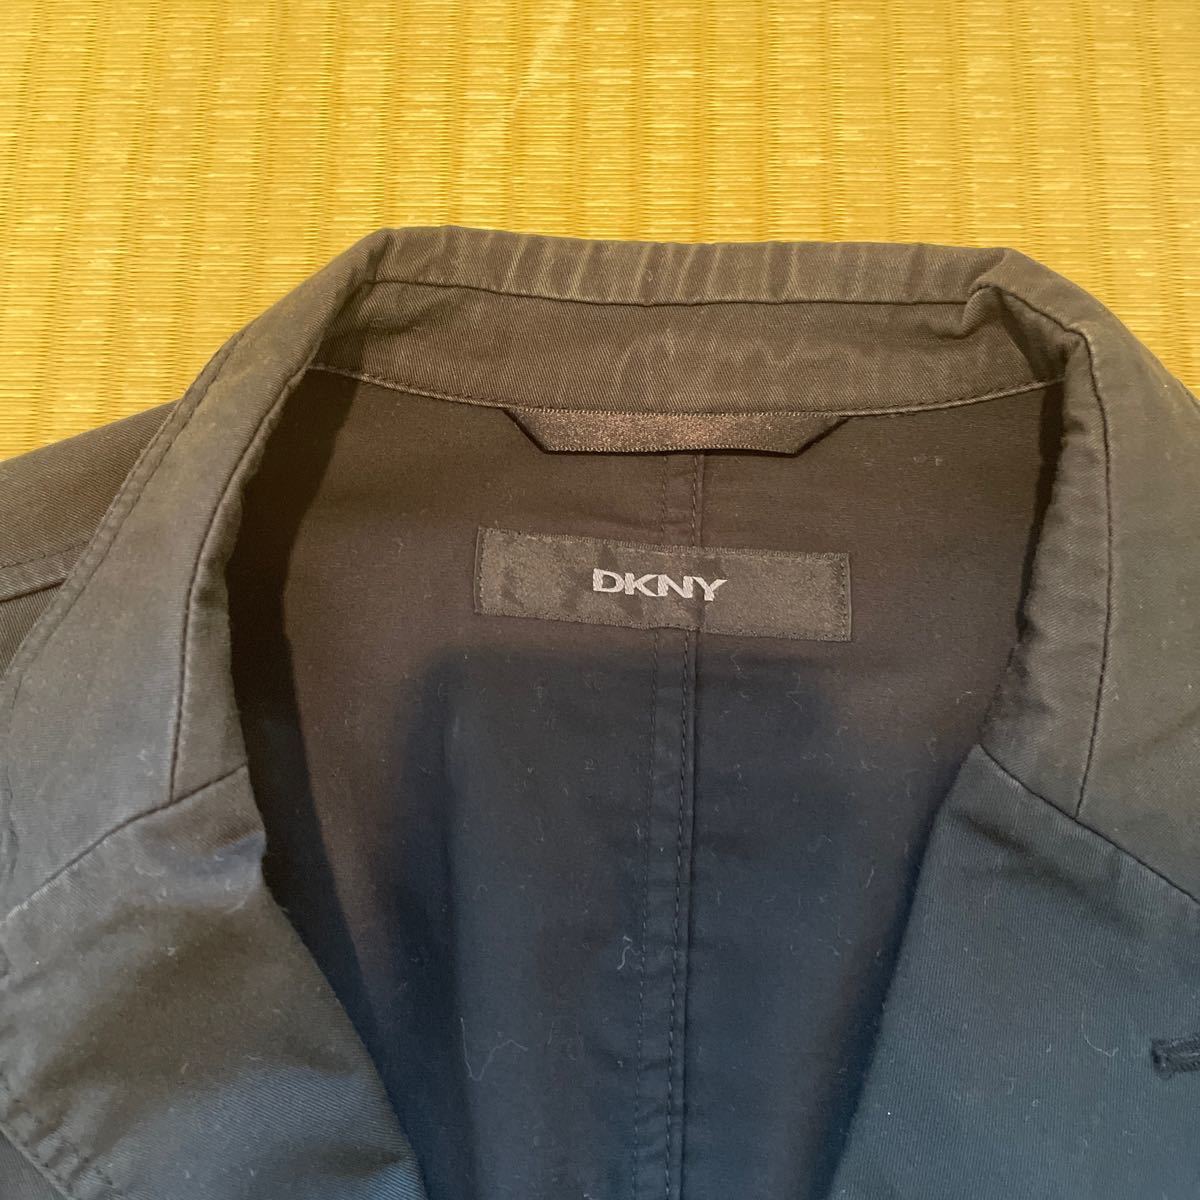 DKNY ジャケット ダナキャランニューヨーク コットン テーラードジャケット dkny スーツジャケット_画像2